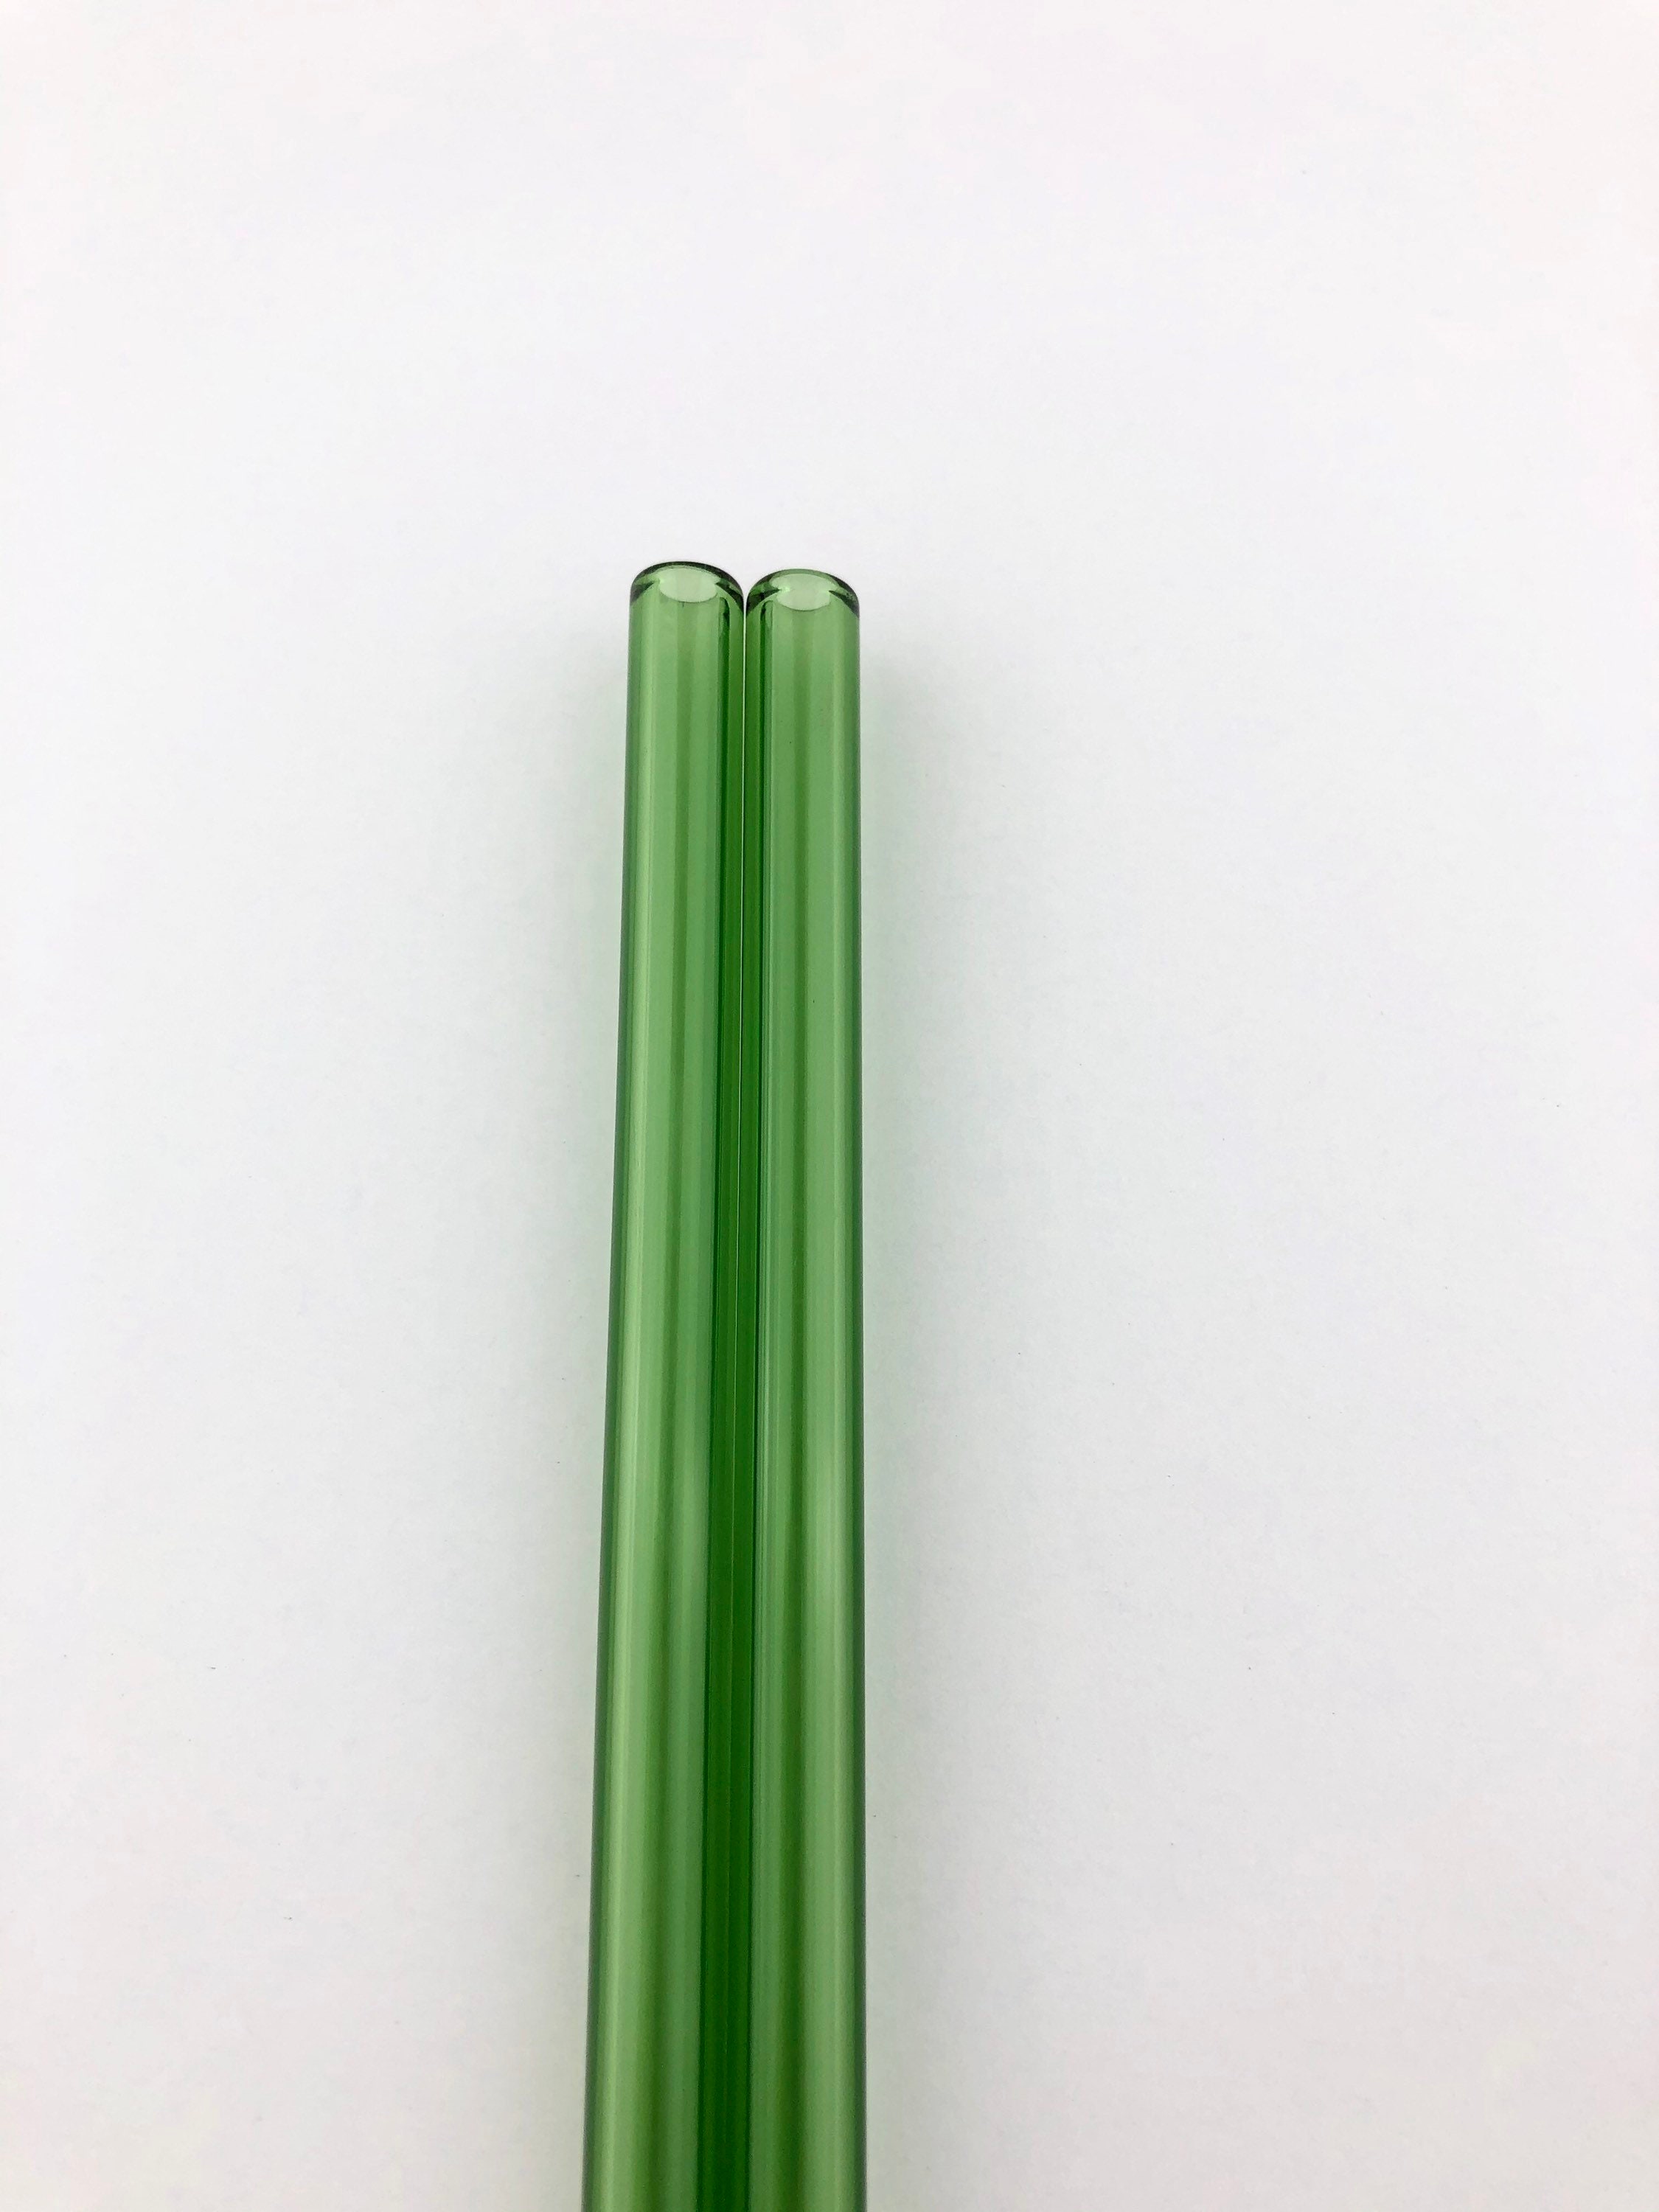 GREEN 4 GLASS STRAWS - LONG, 9MM